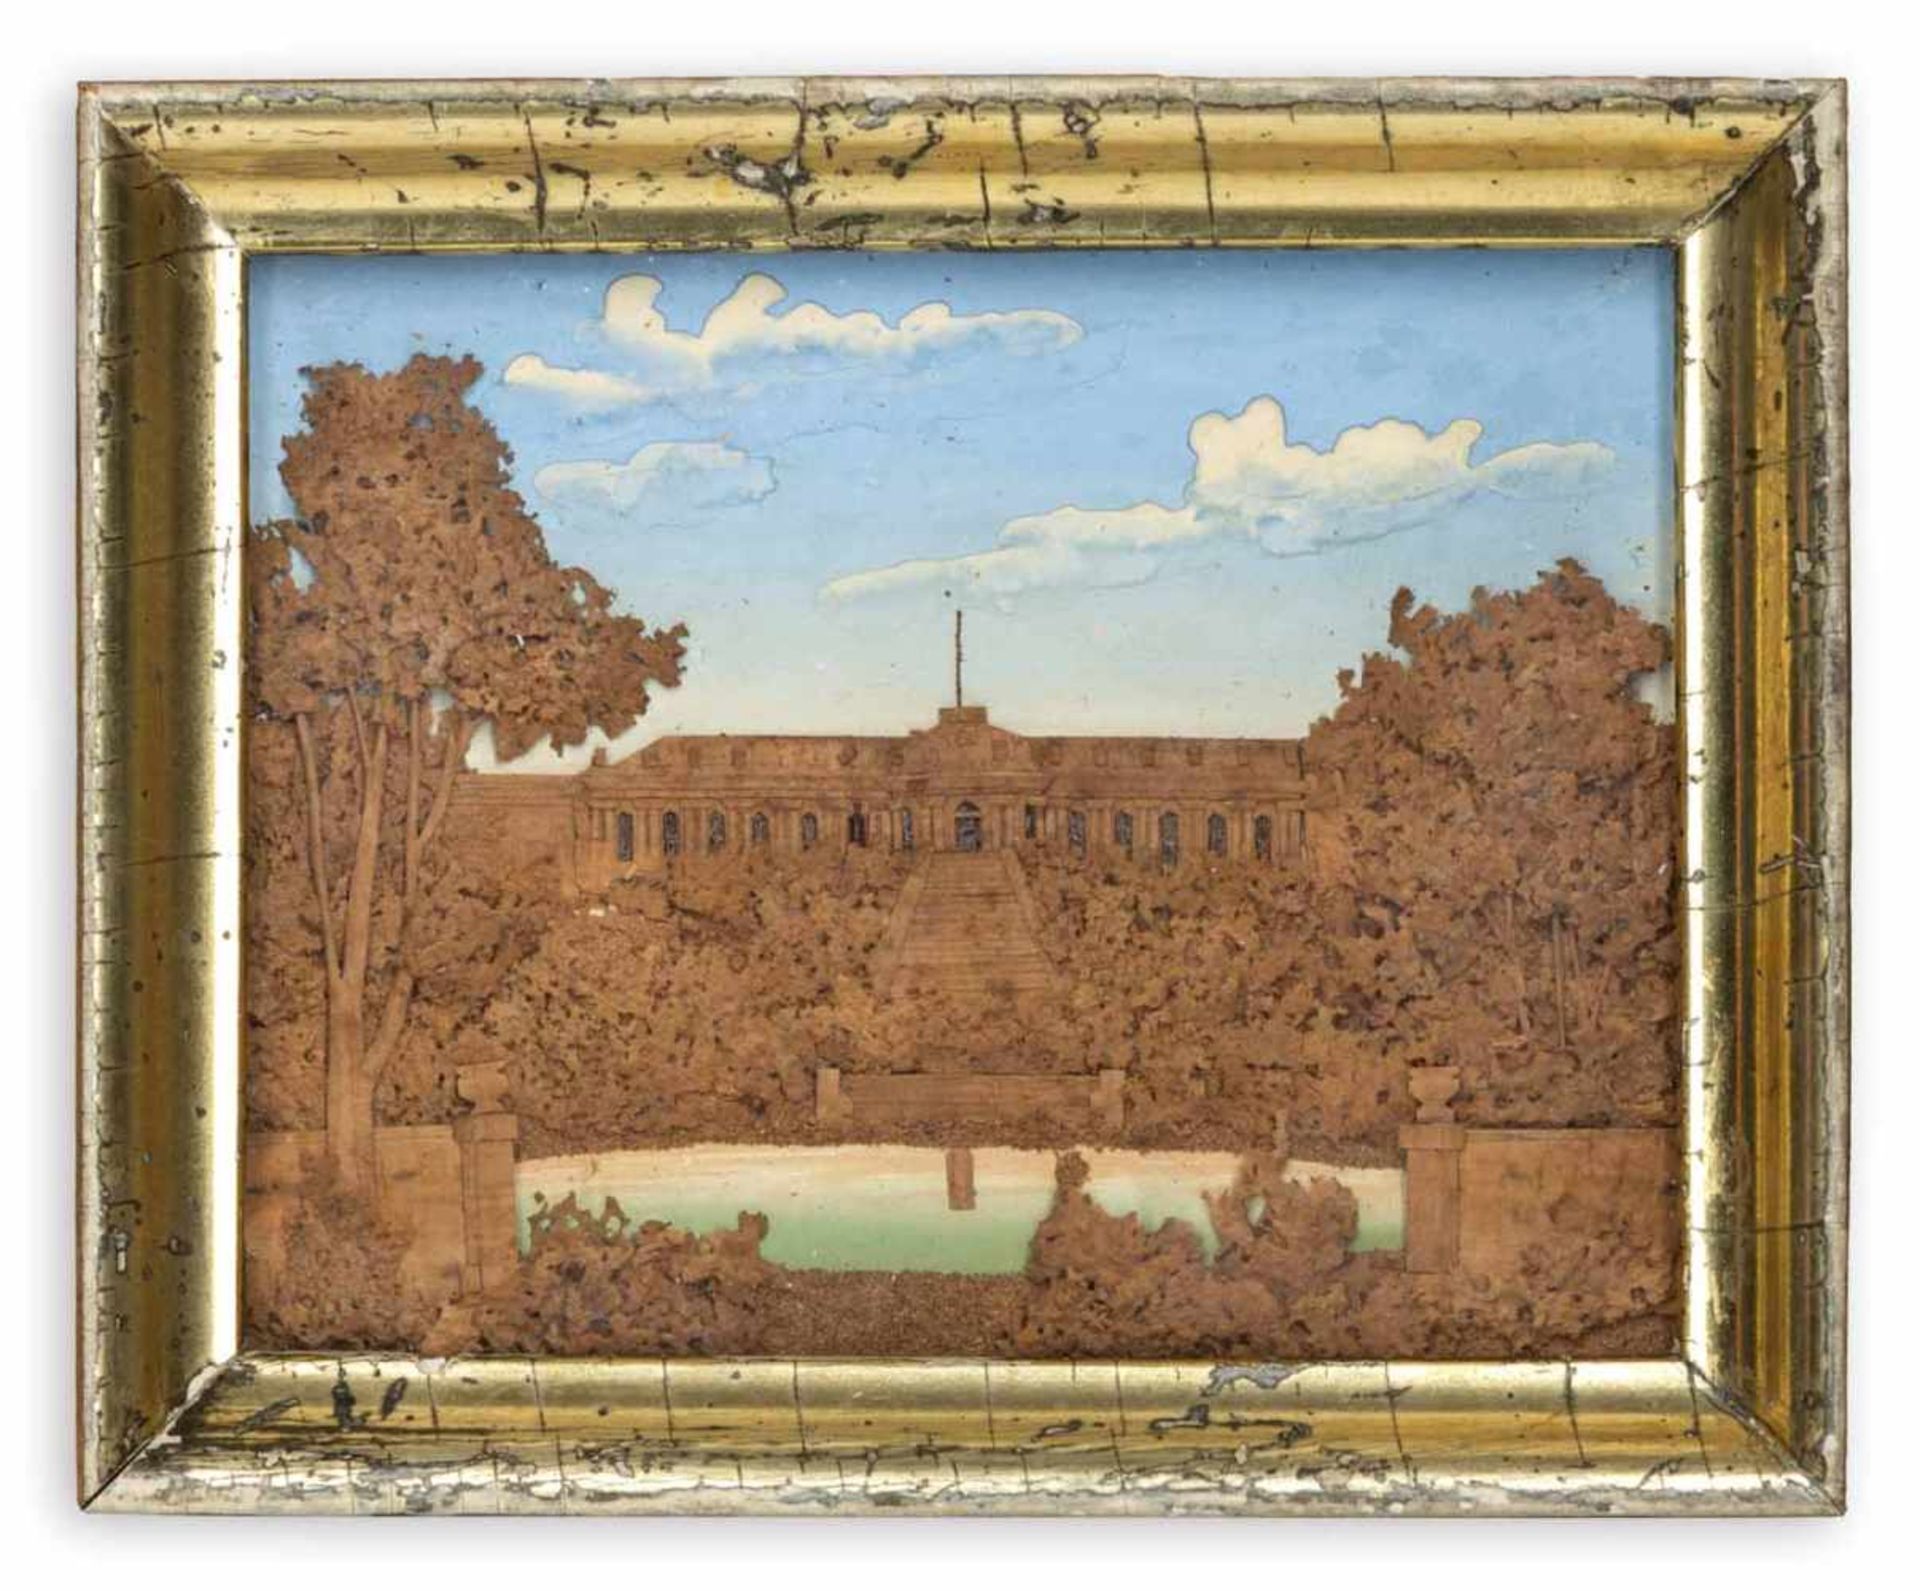 Zwei Korkdioramen, Phelloplastik, Potsdam-AnsichtenMitte 19. JahrhundertH. 10,5/12 cmSchloss - Bild 2 aus 3